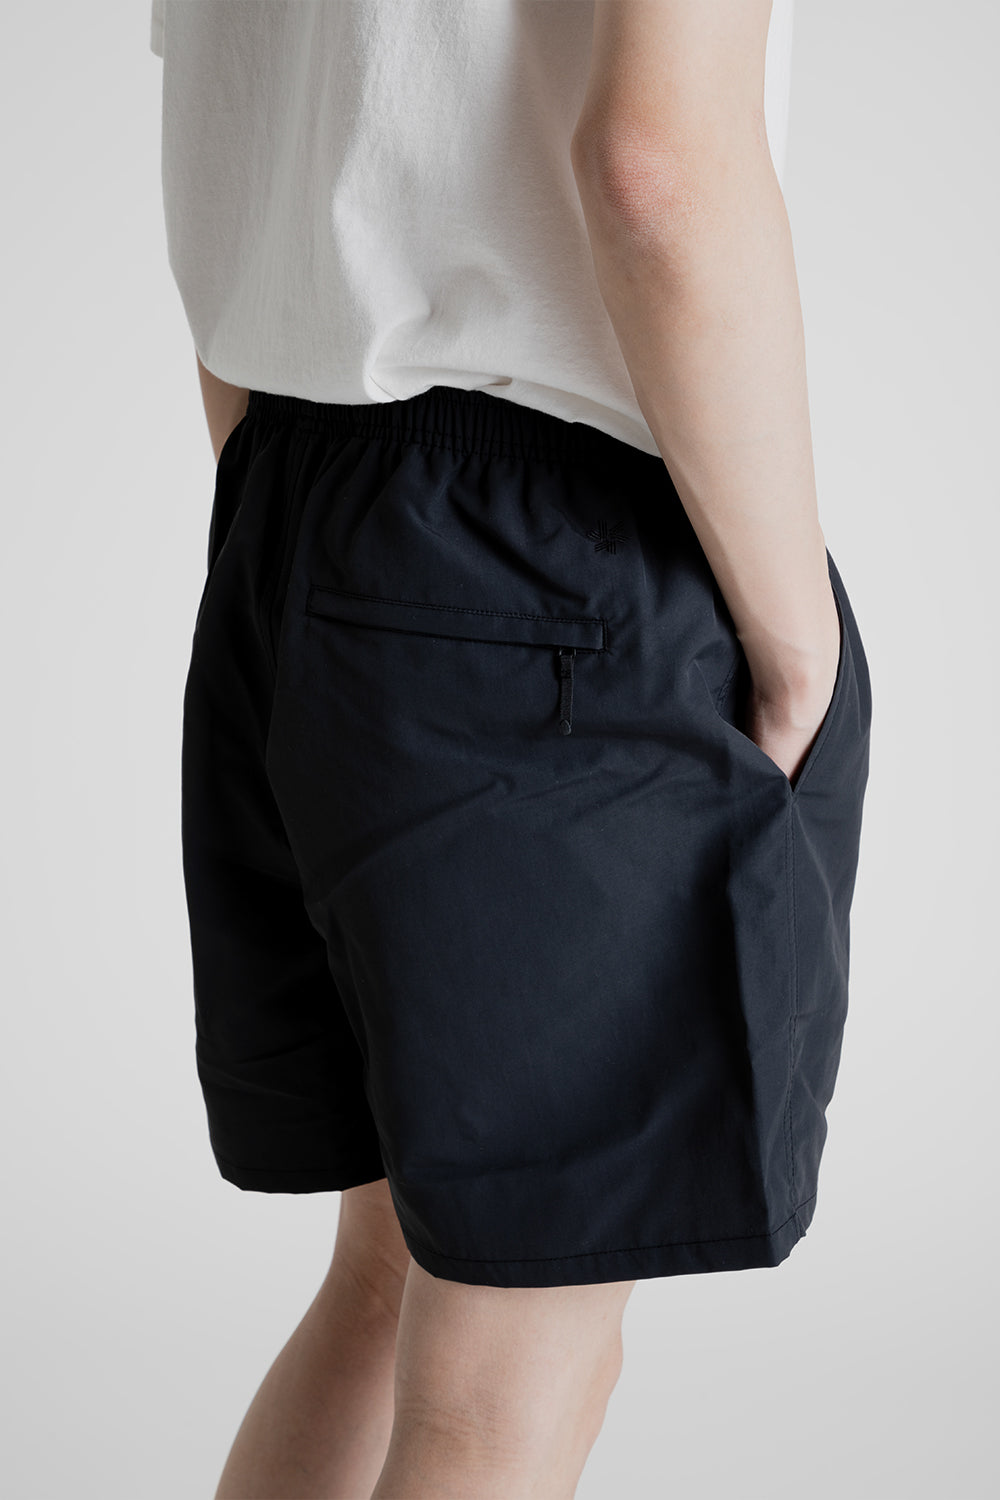 Goldwin Nylon Shorts 5 Inch in Black